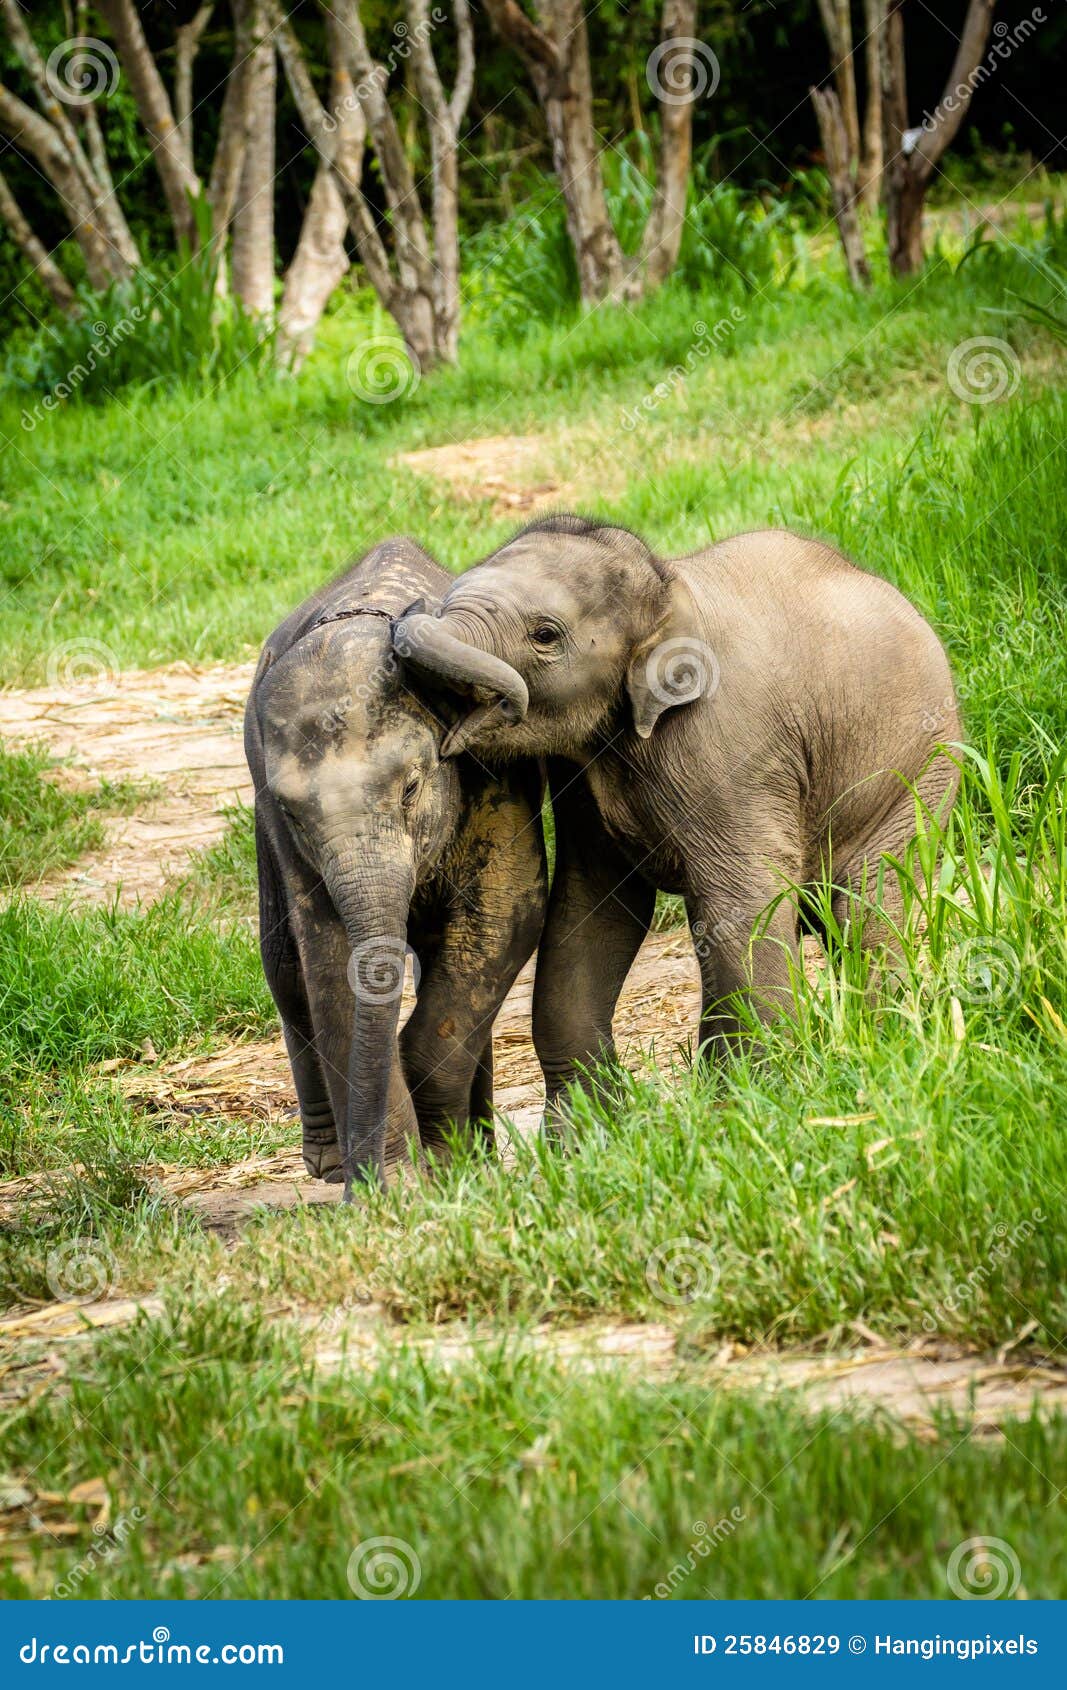 1,804 Elephants Nose Stock Photos - Free & Royalty-Free Stock